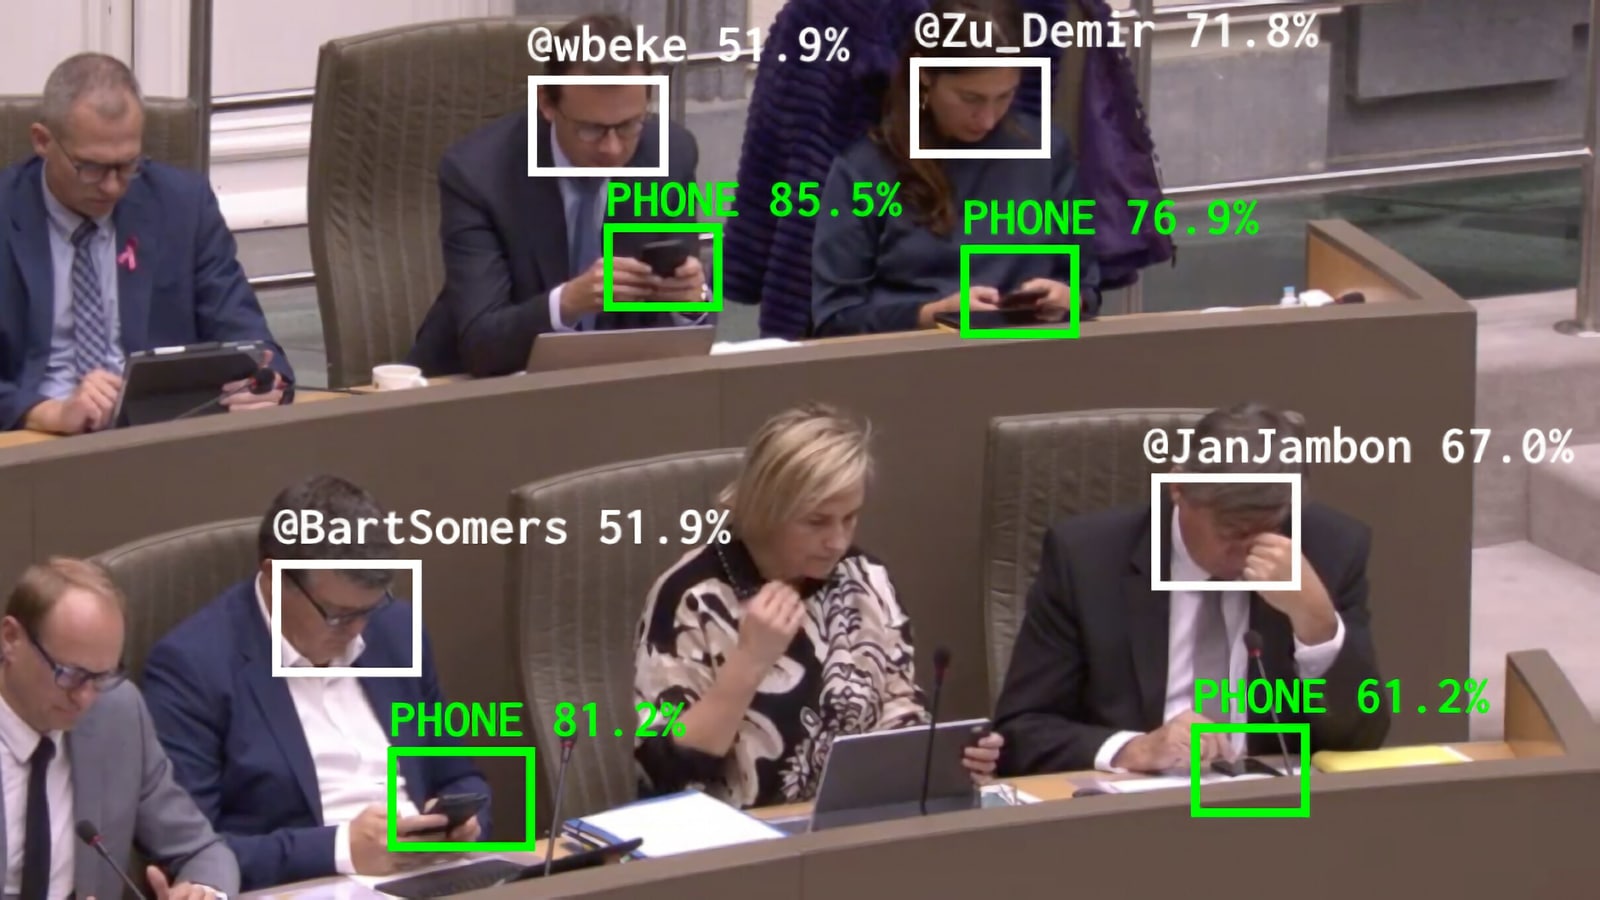 Flemish Scrollers Tracks Parliamentarians’ Smartphones Usage